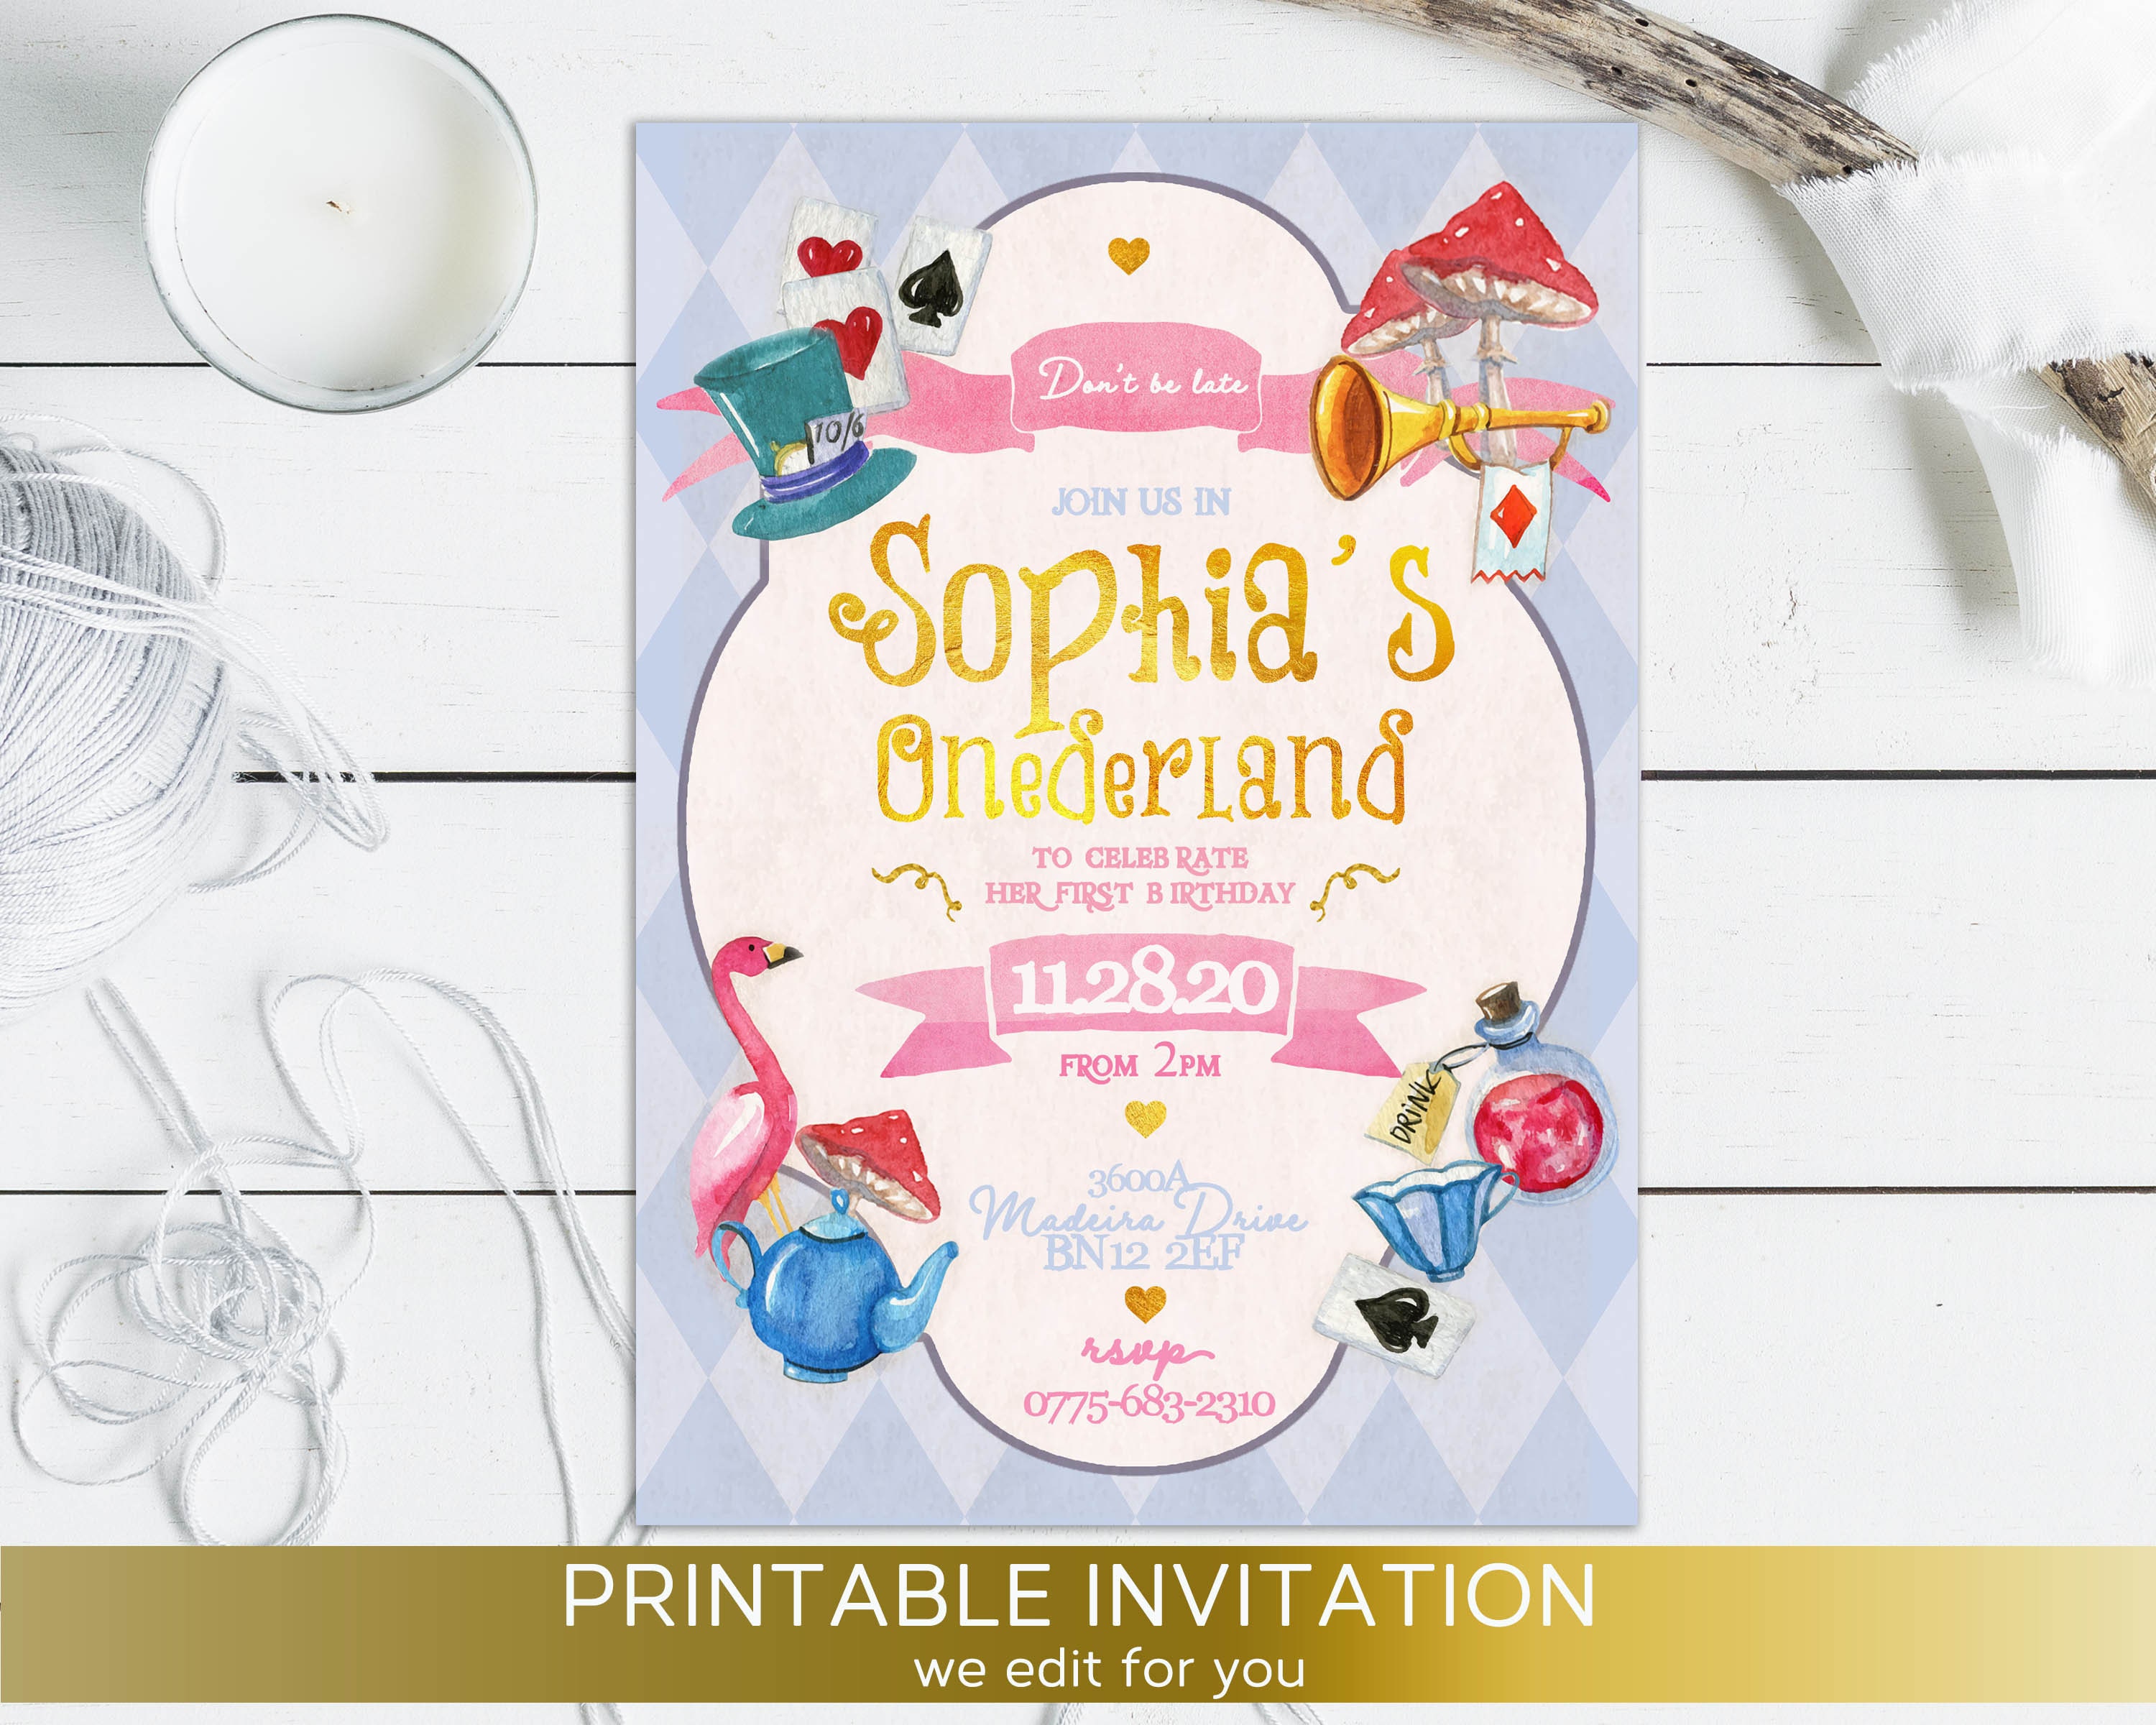 Alice in Wonderland Invitations - Inviting Designs by Angela